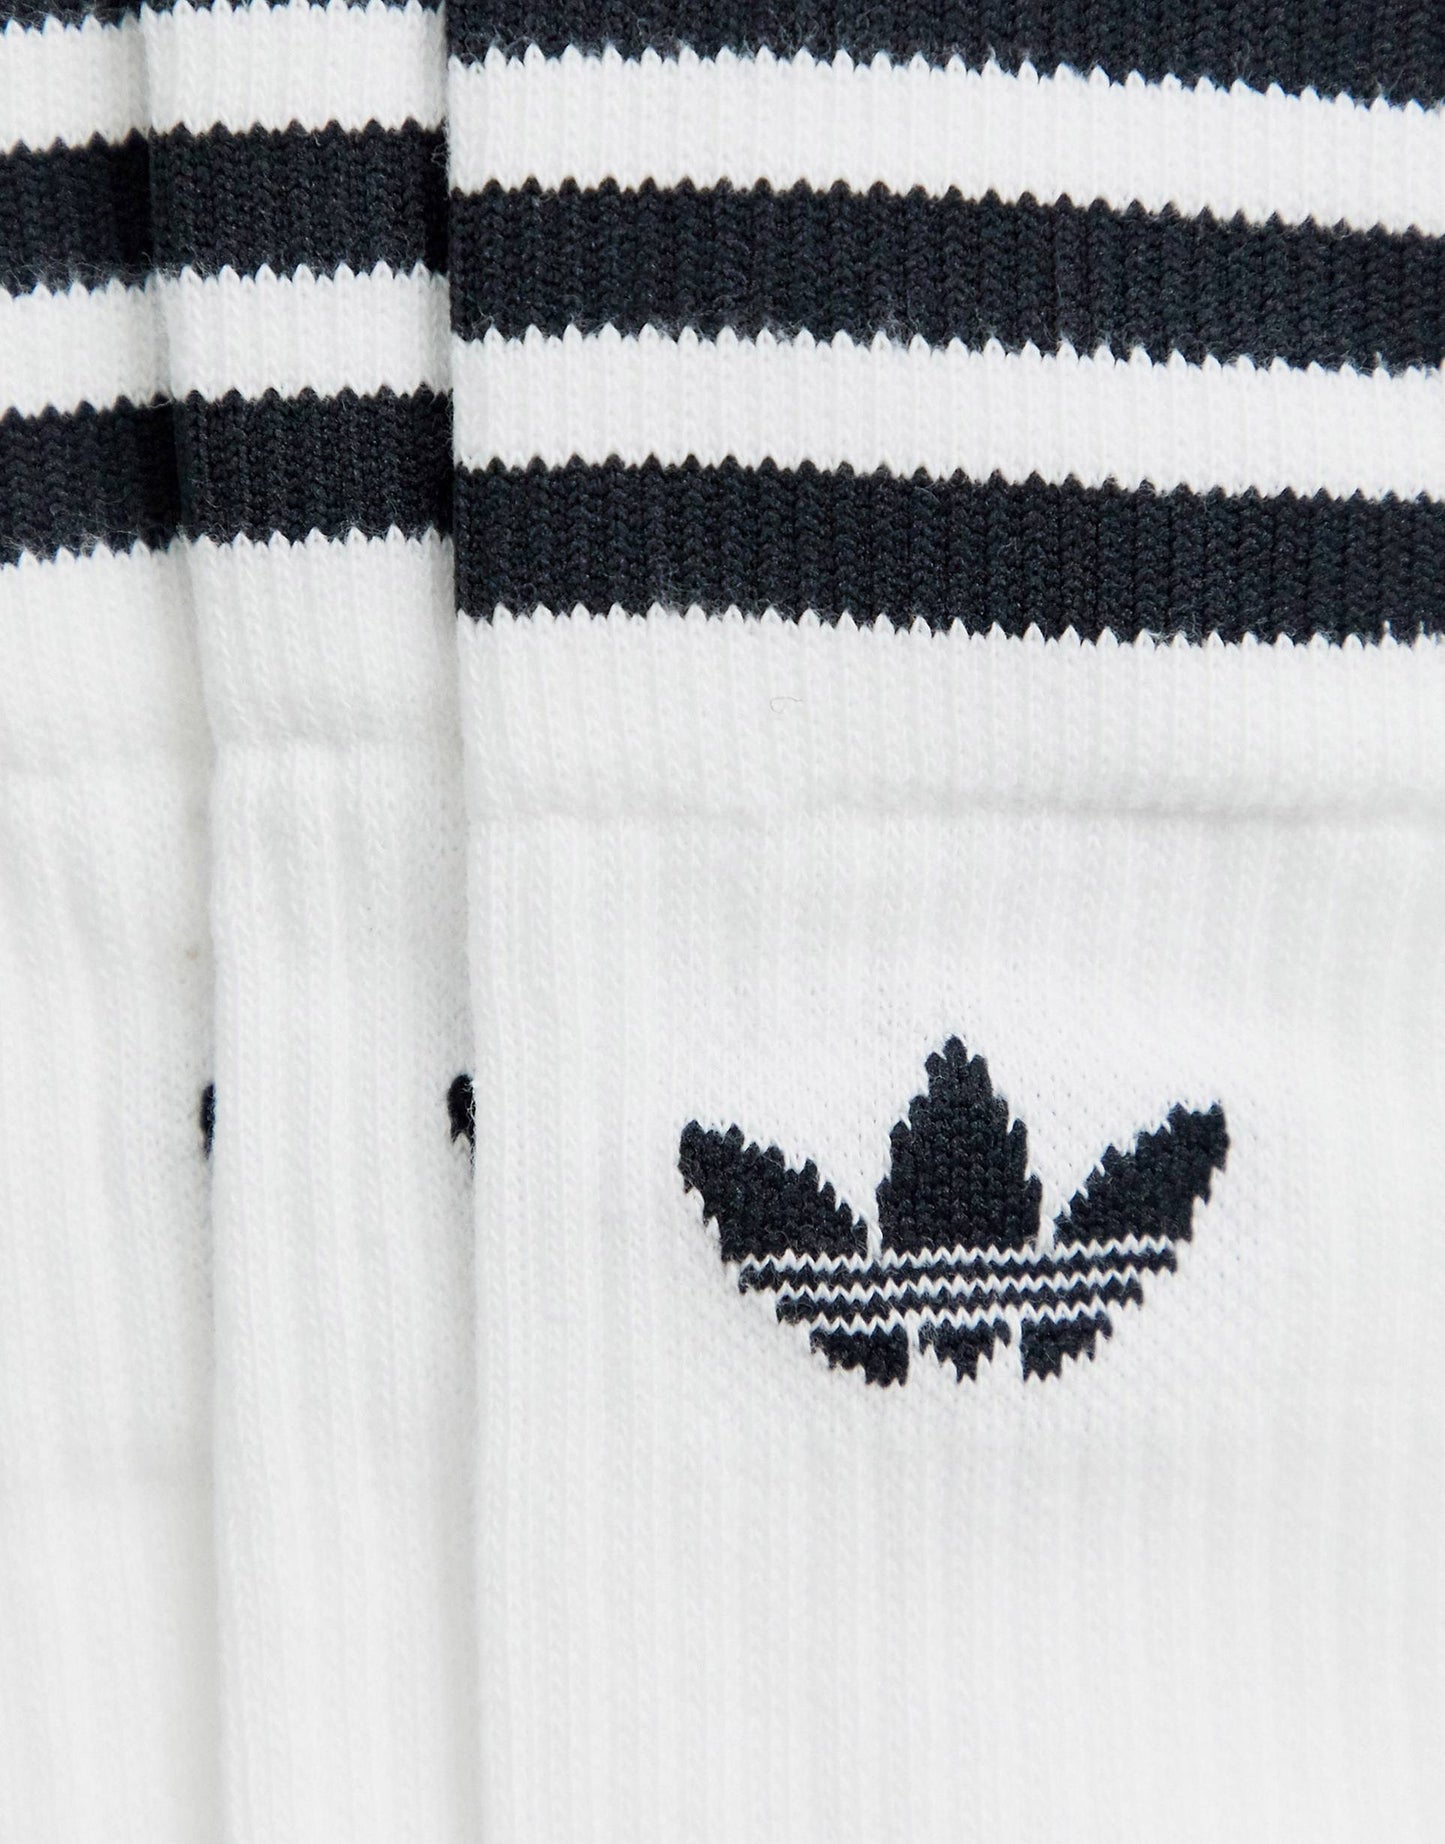 Adidas crew socks white